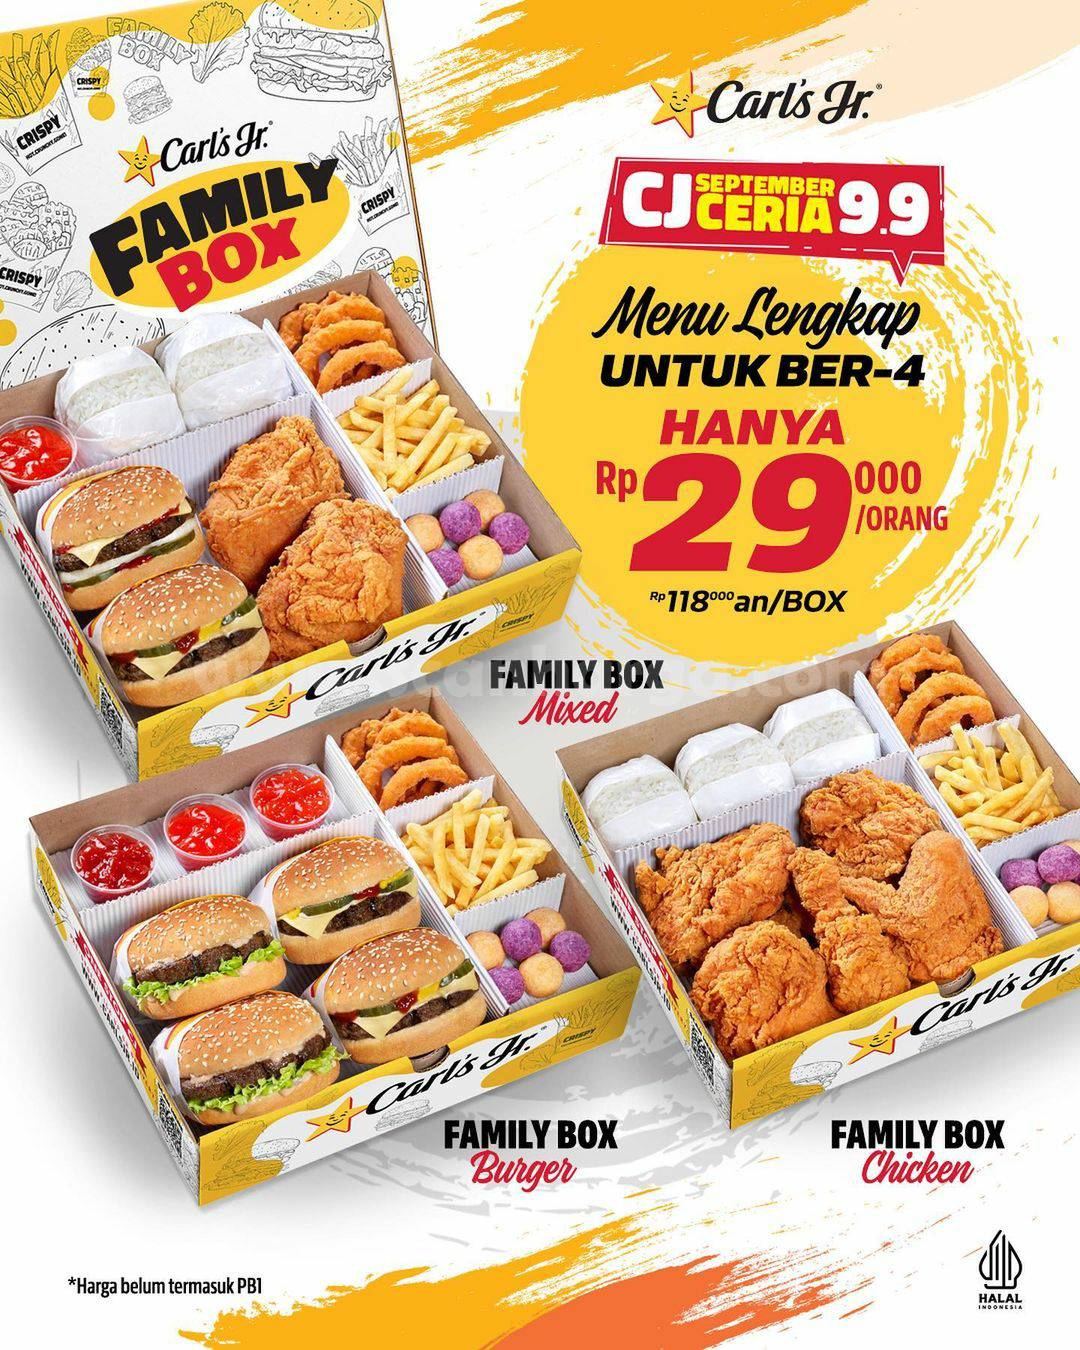 Promo CARLS Jr Family Box ! Paket BEREMPAT hanya Rp. 29.000